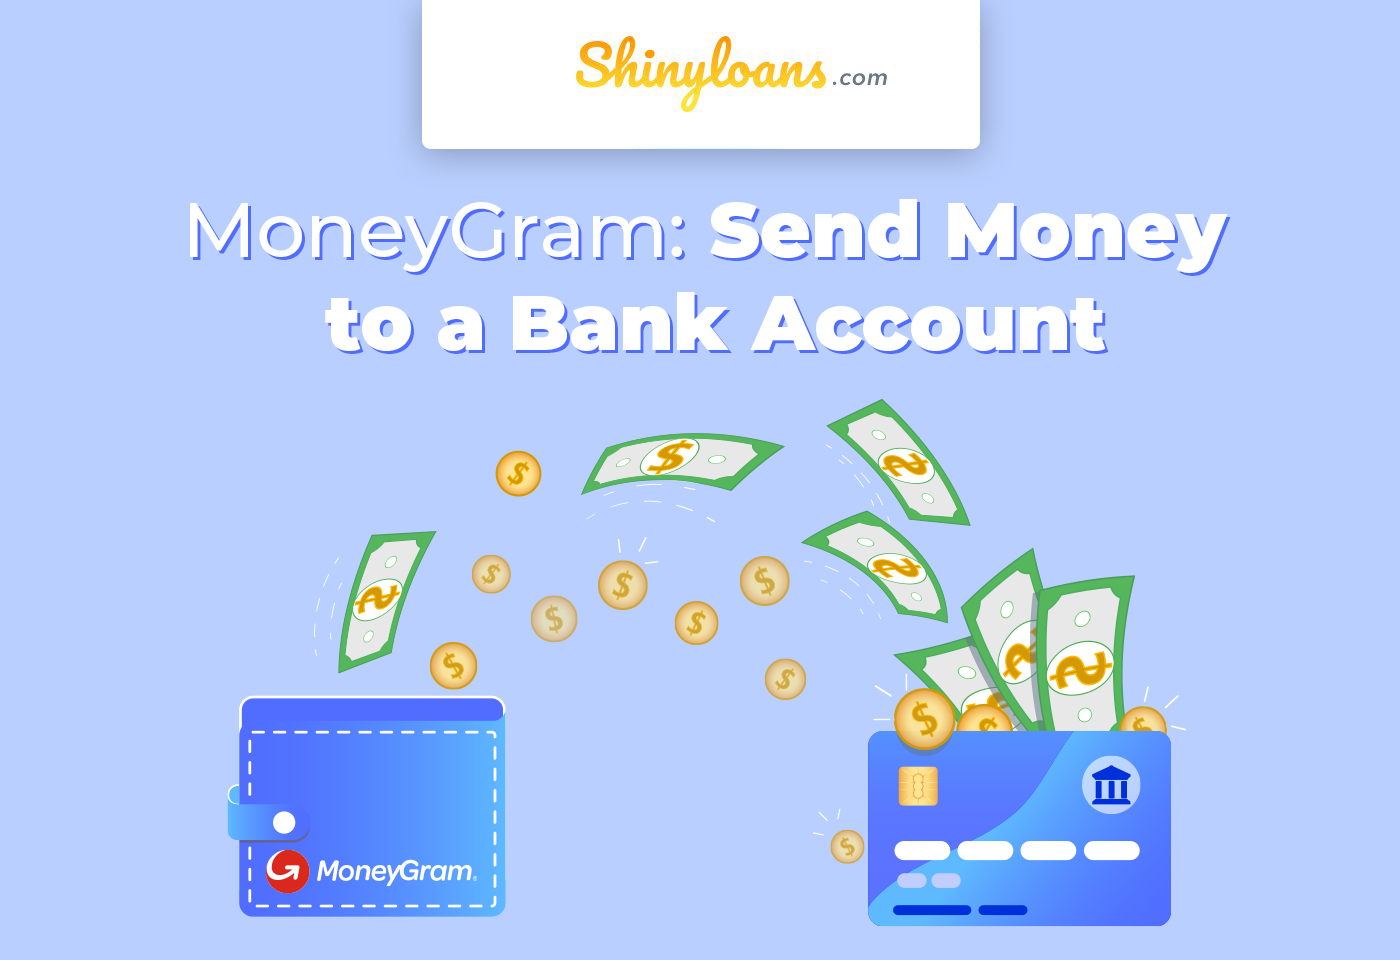 MoneyGram: Send Money to a Bank Account